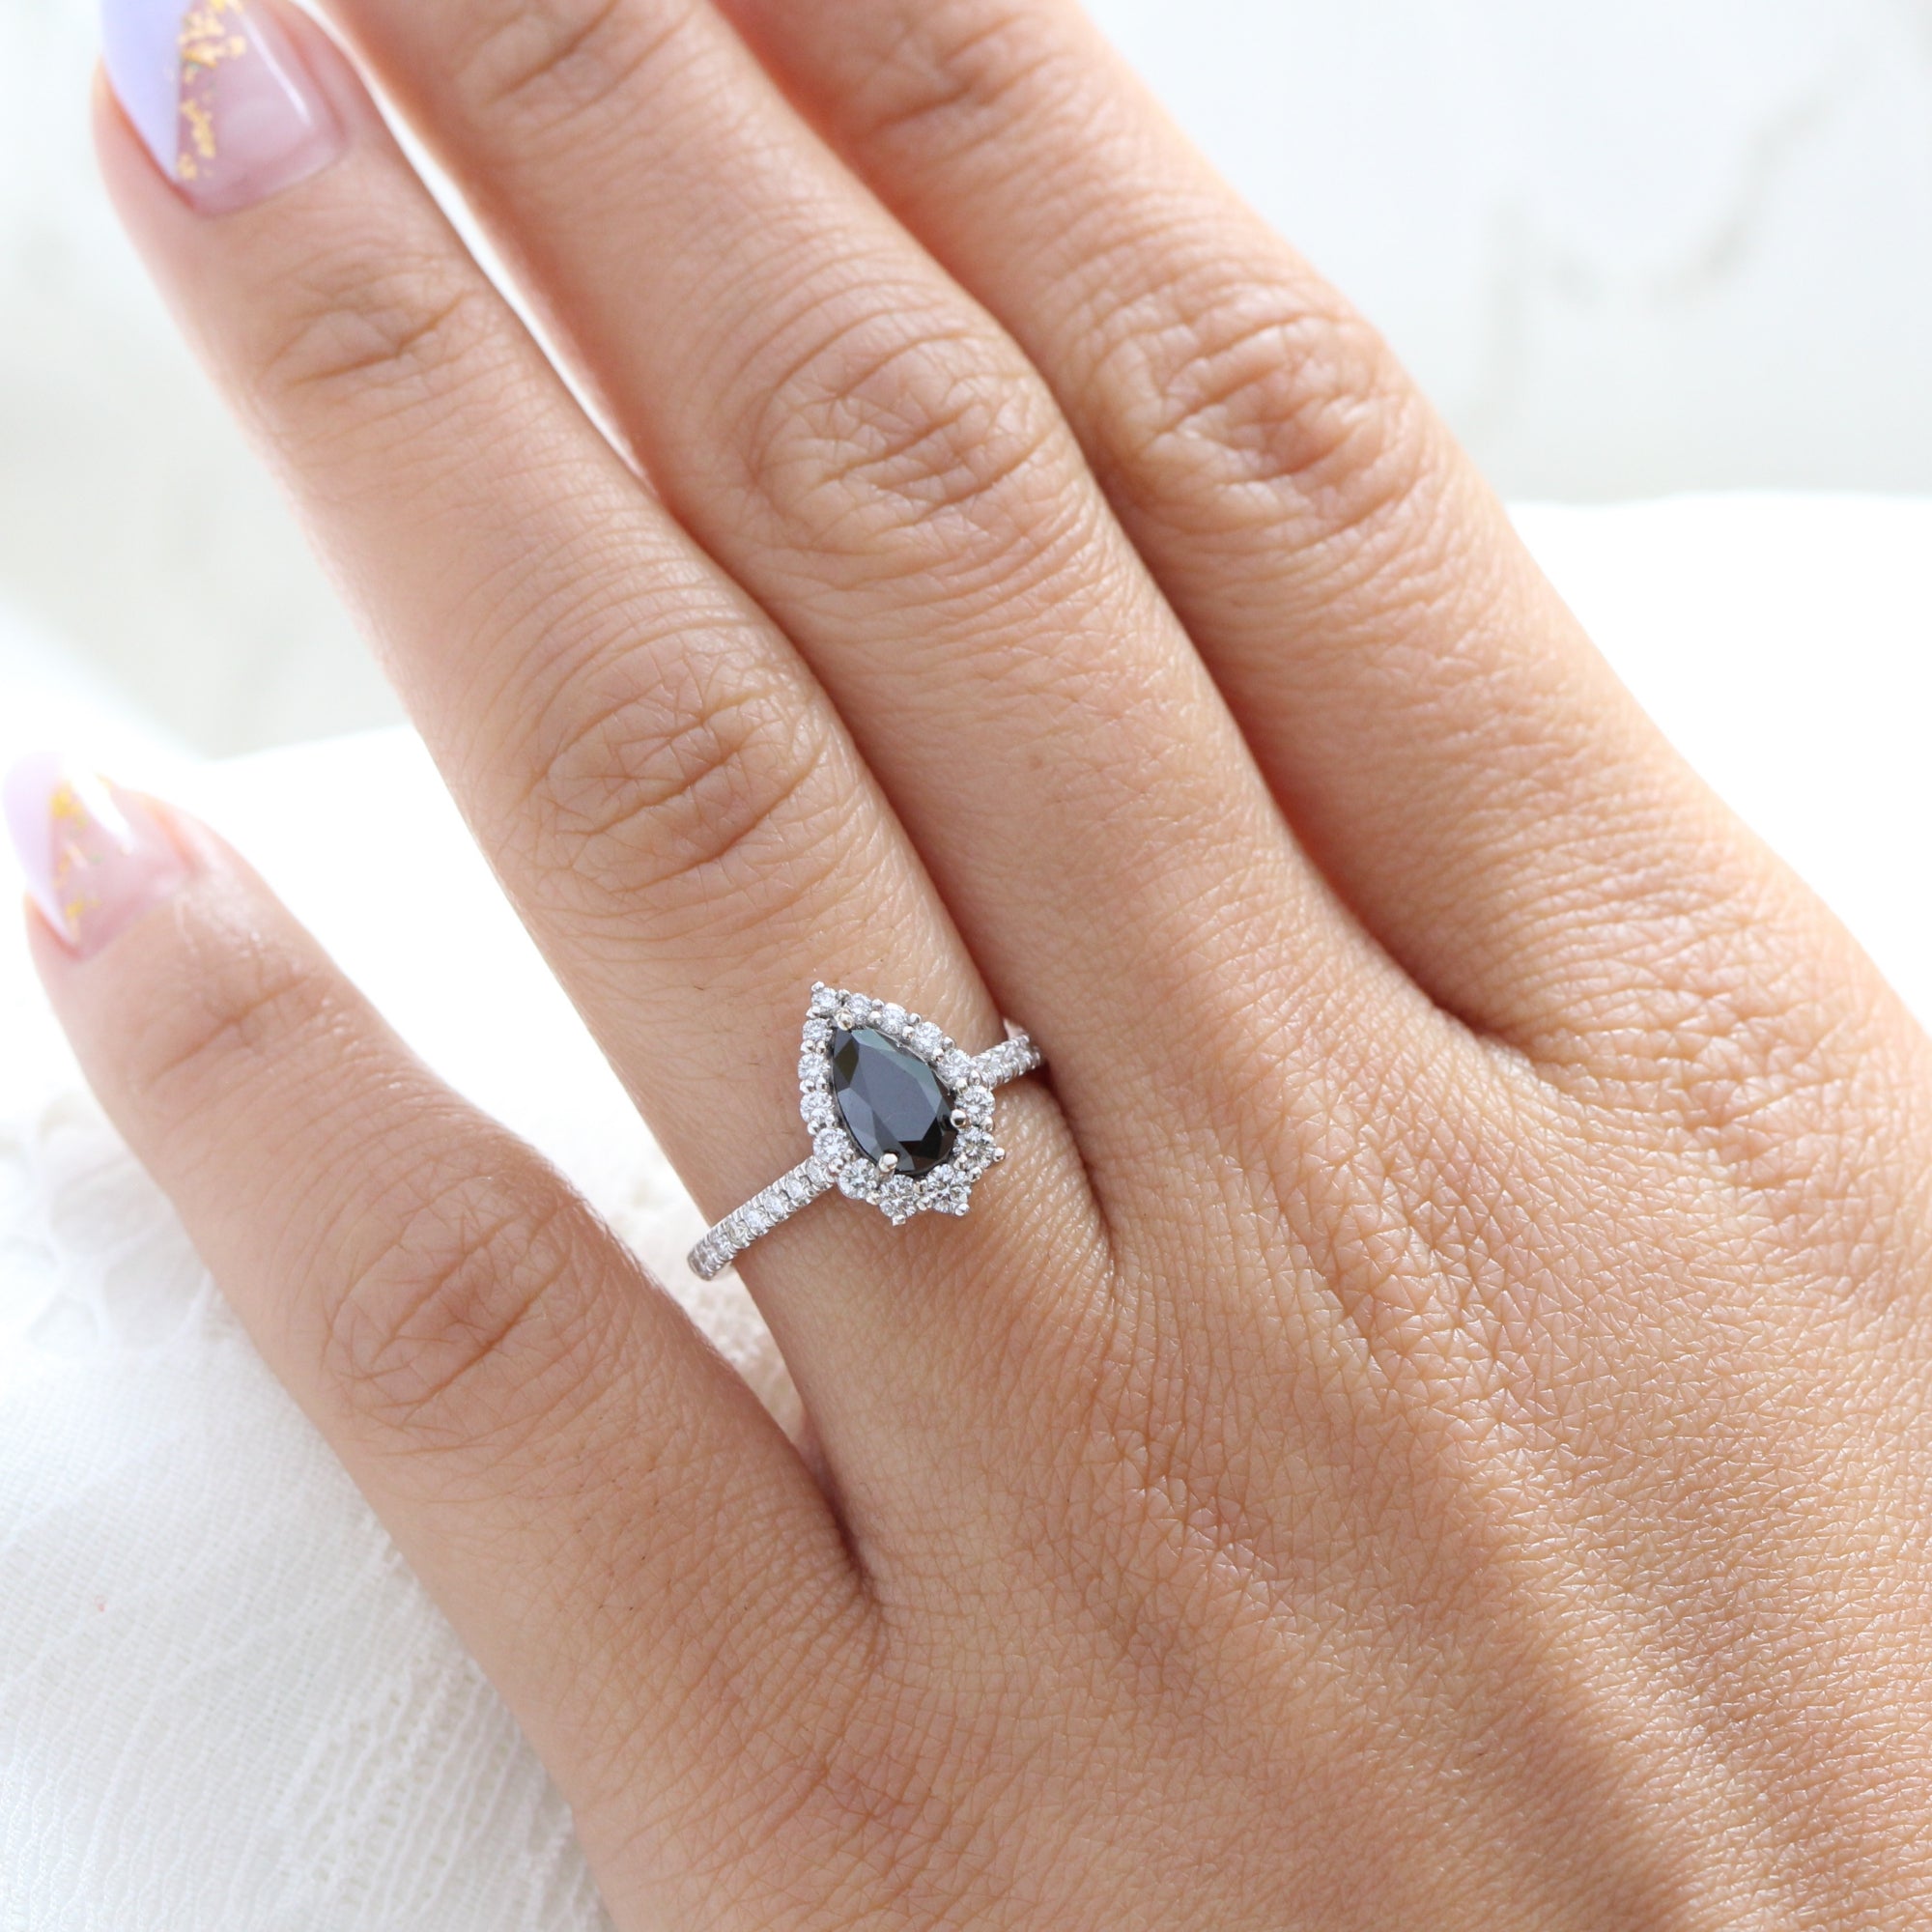 Pear black diamond engagement ring white gold large halo ring la more design jewelry